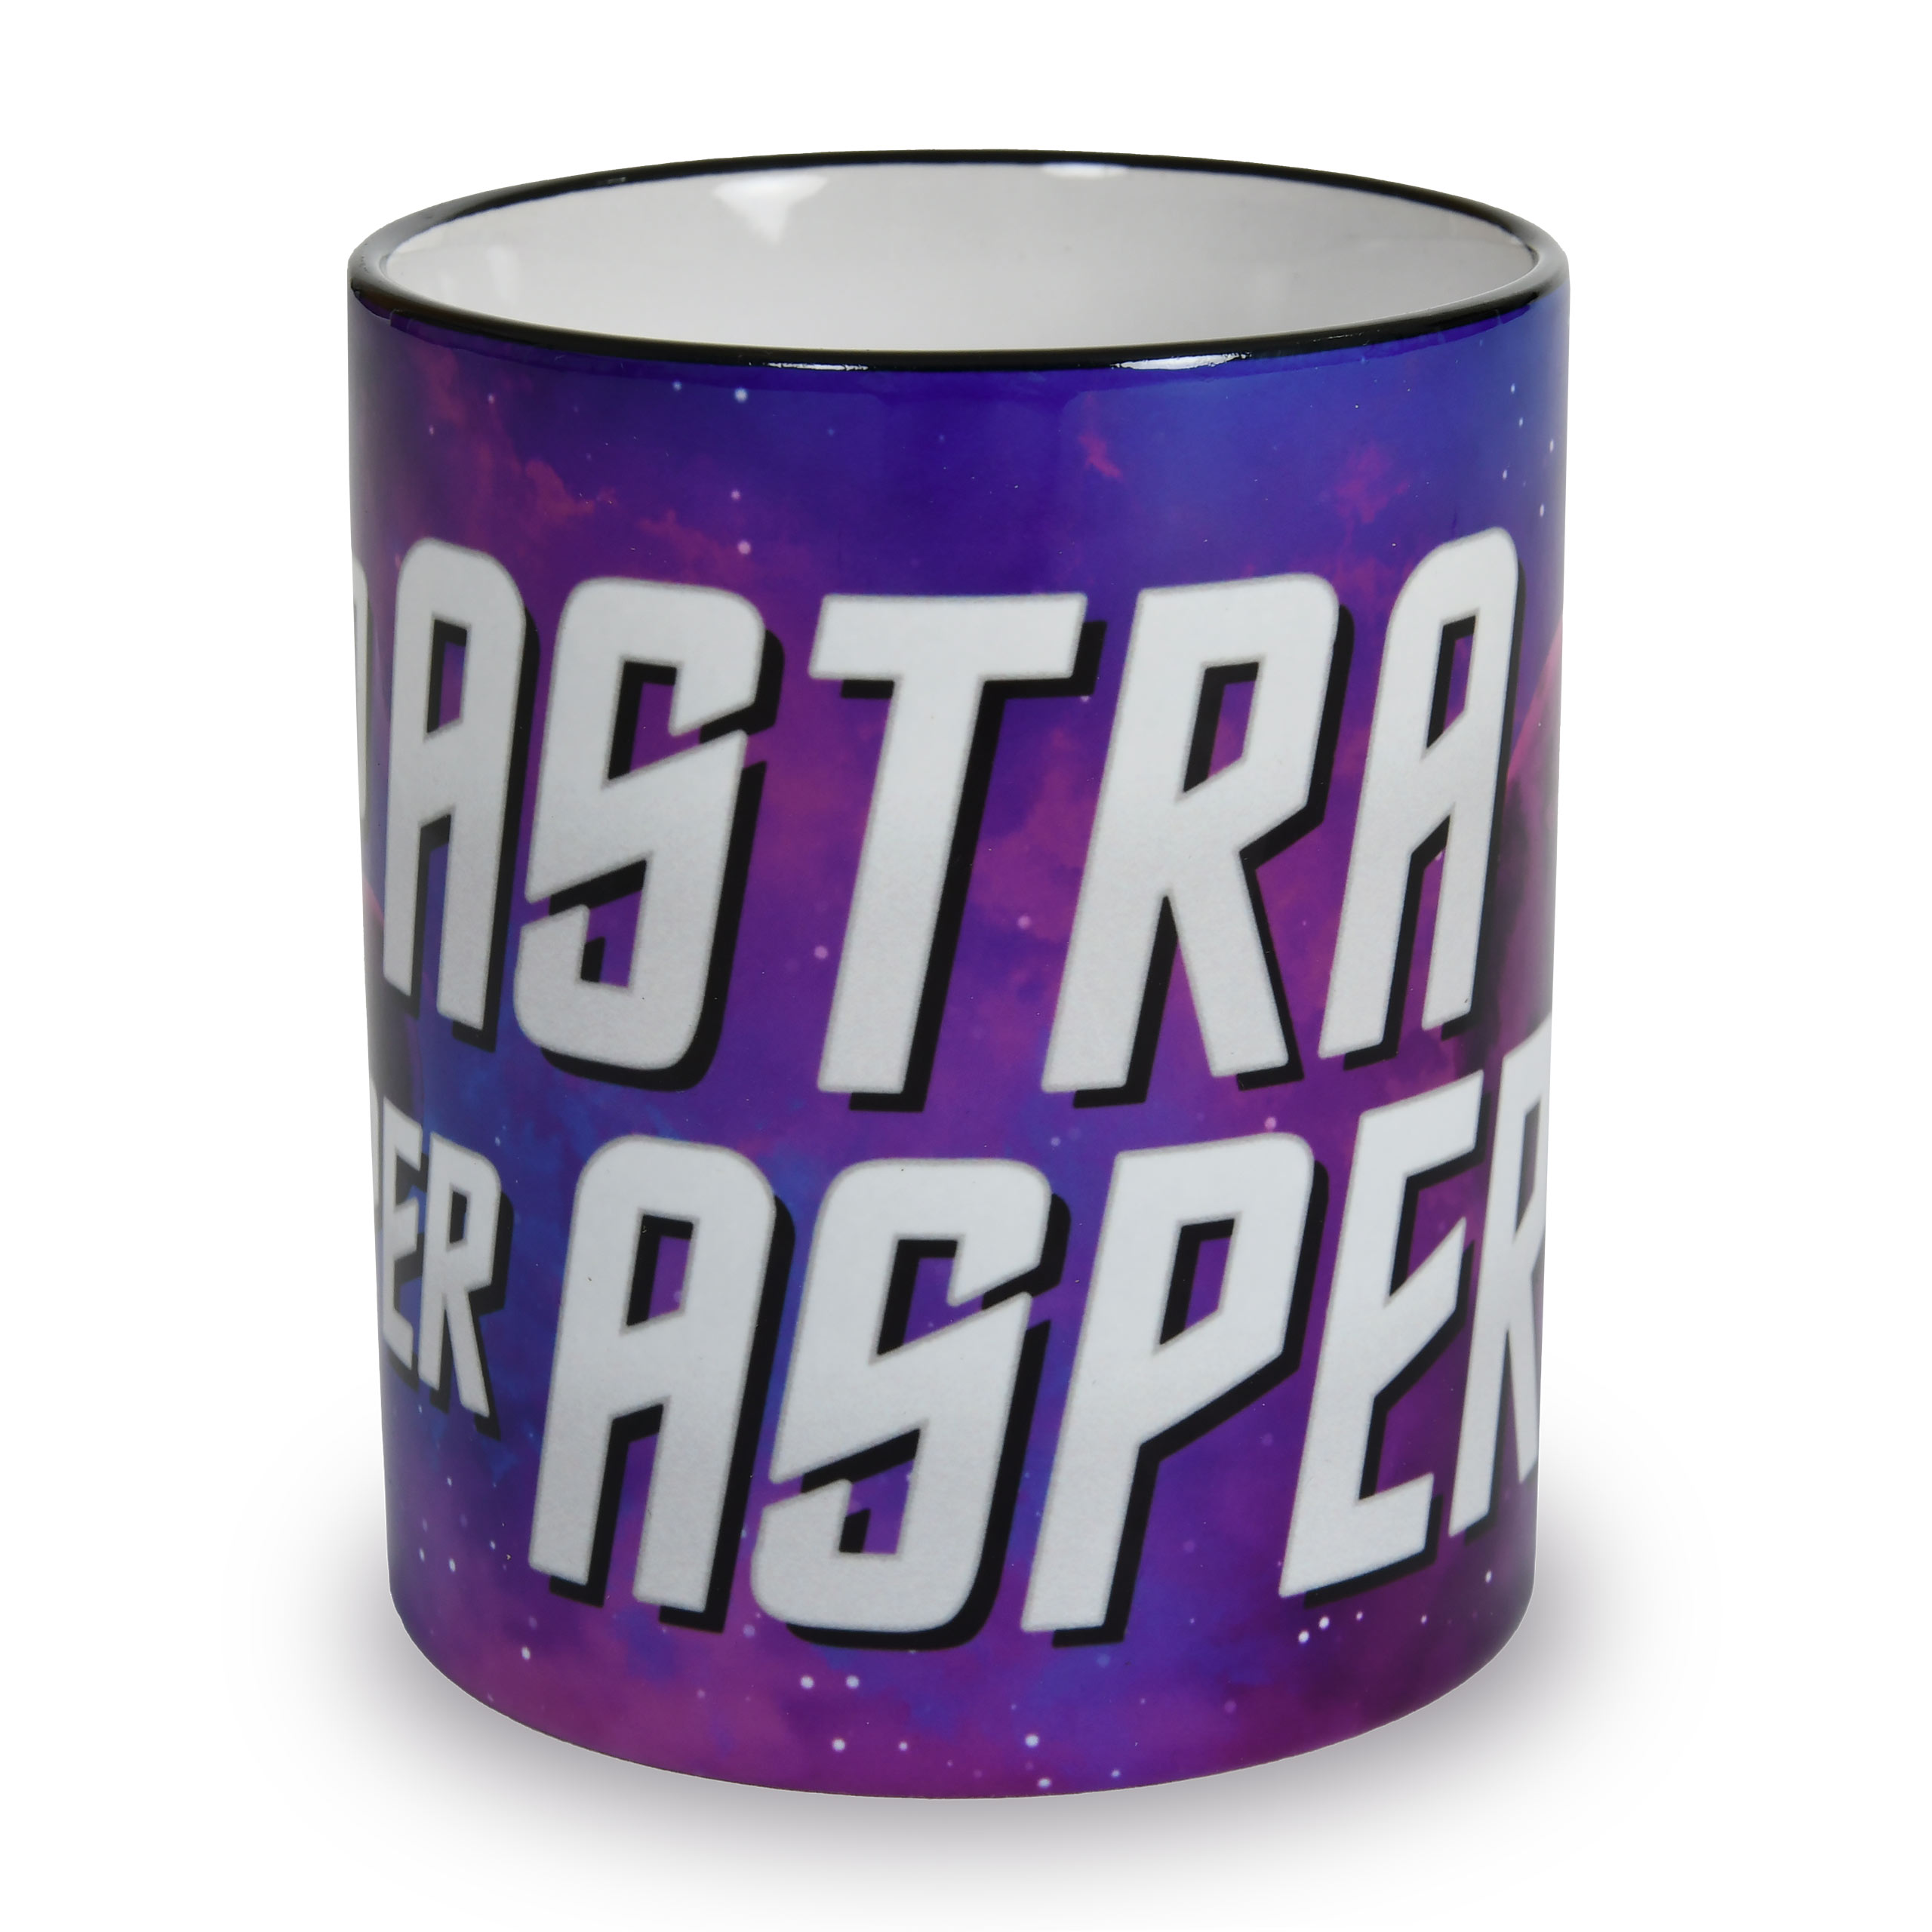 Ad Astra Per Aspera Tasse für Star Trek Fans